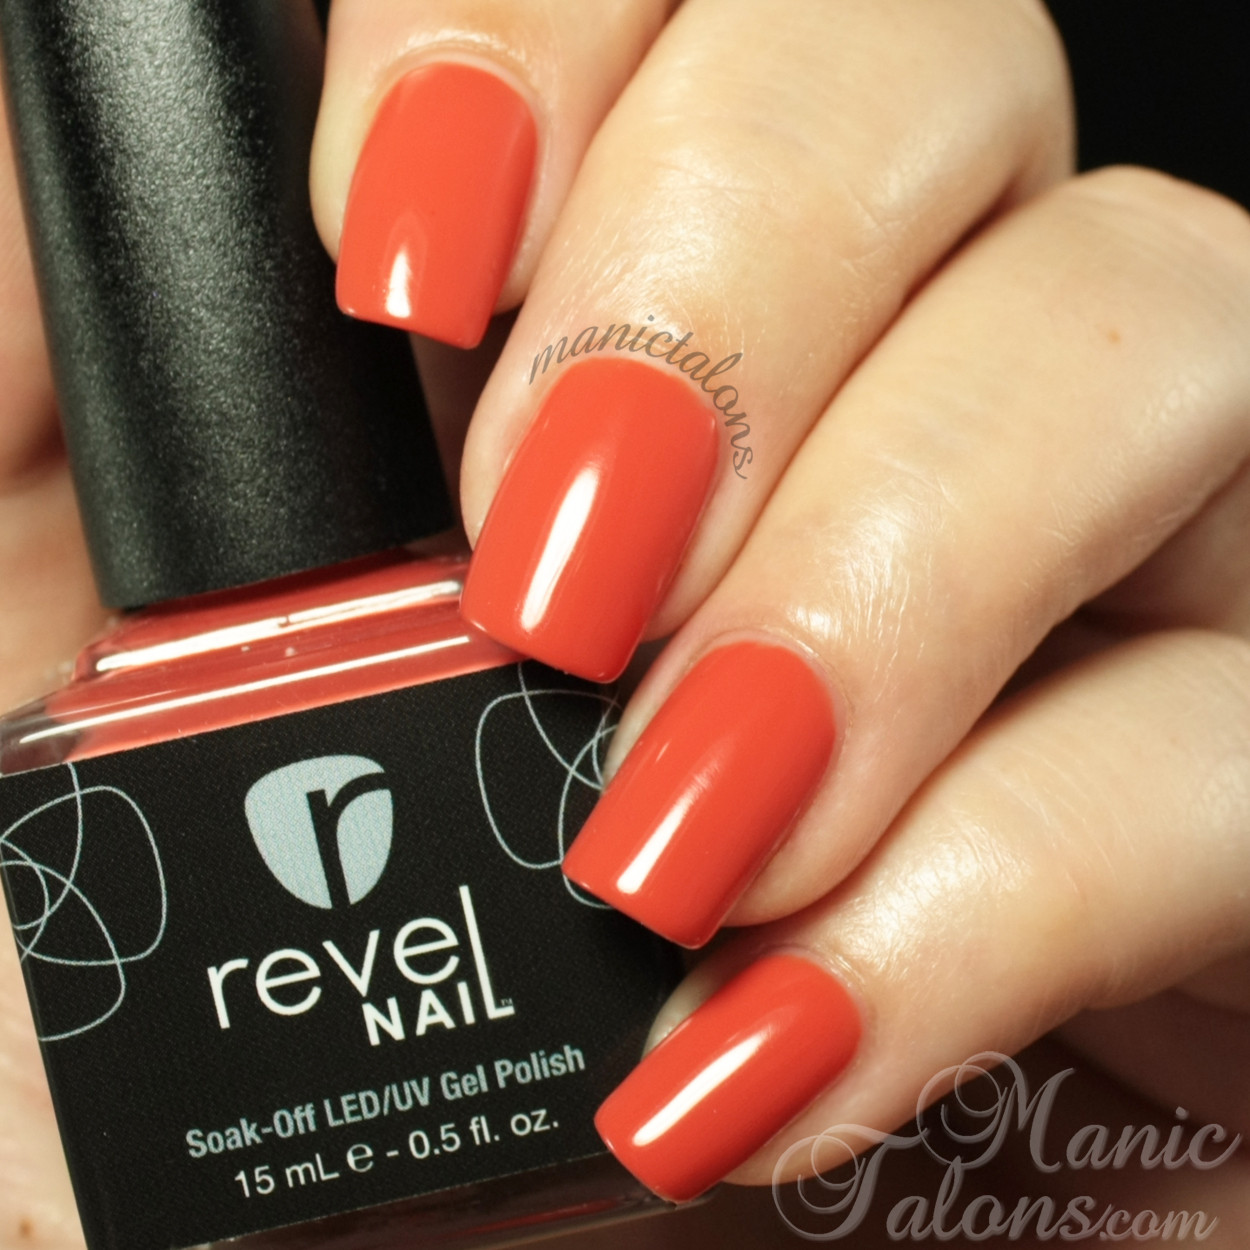 Revel Nail Colors
 Manic Talons Nail Design Revel Nail Gel Polish Swatches